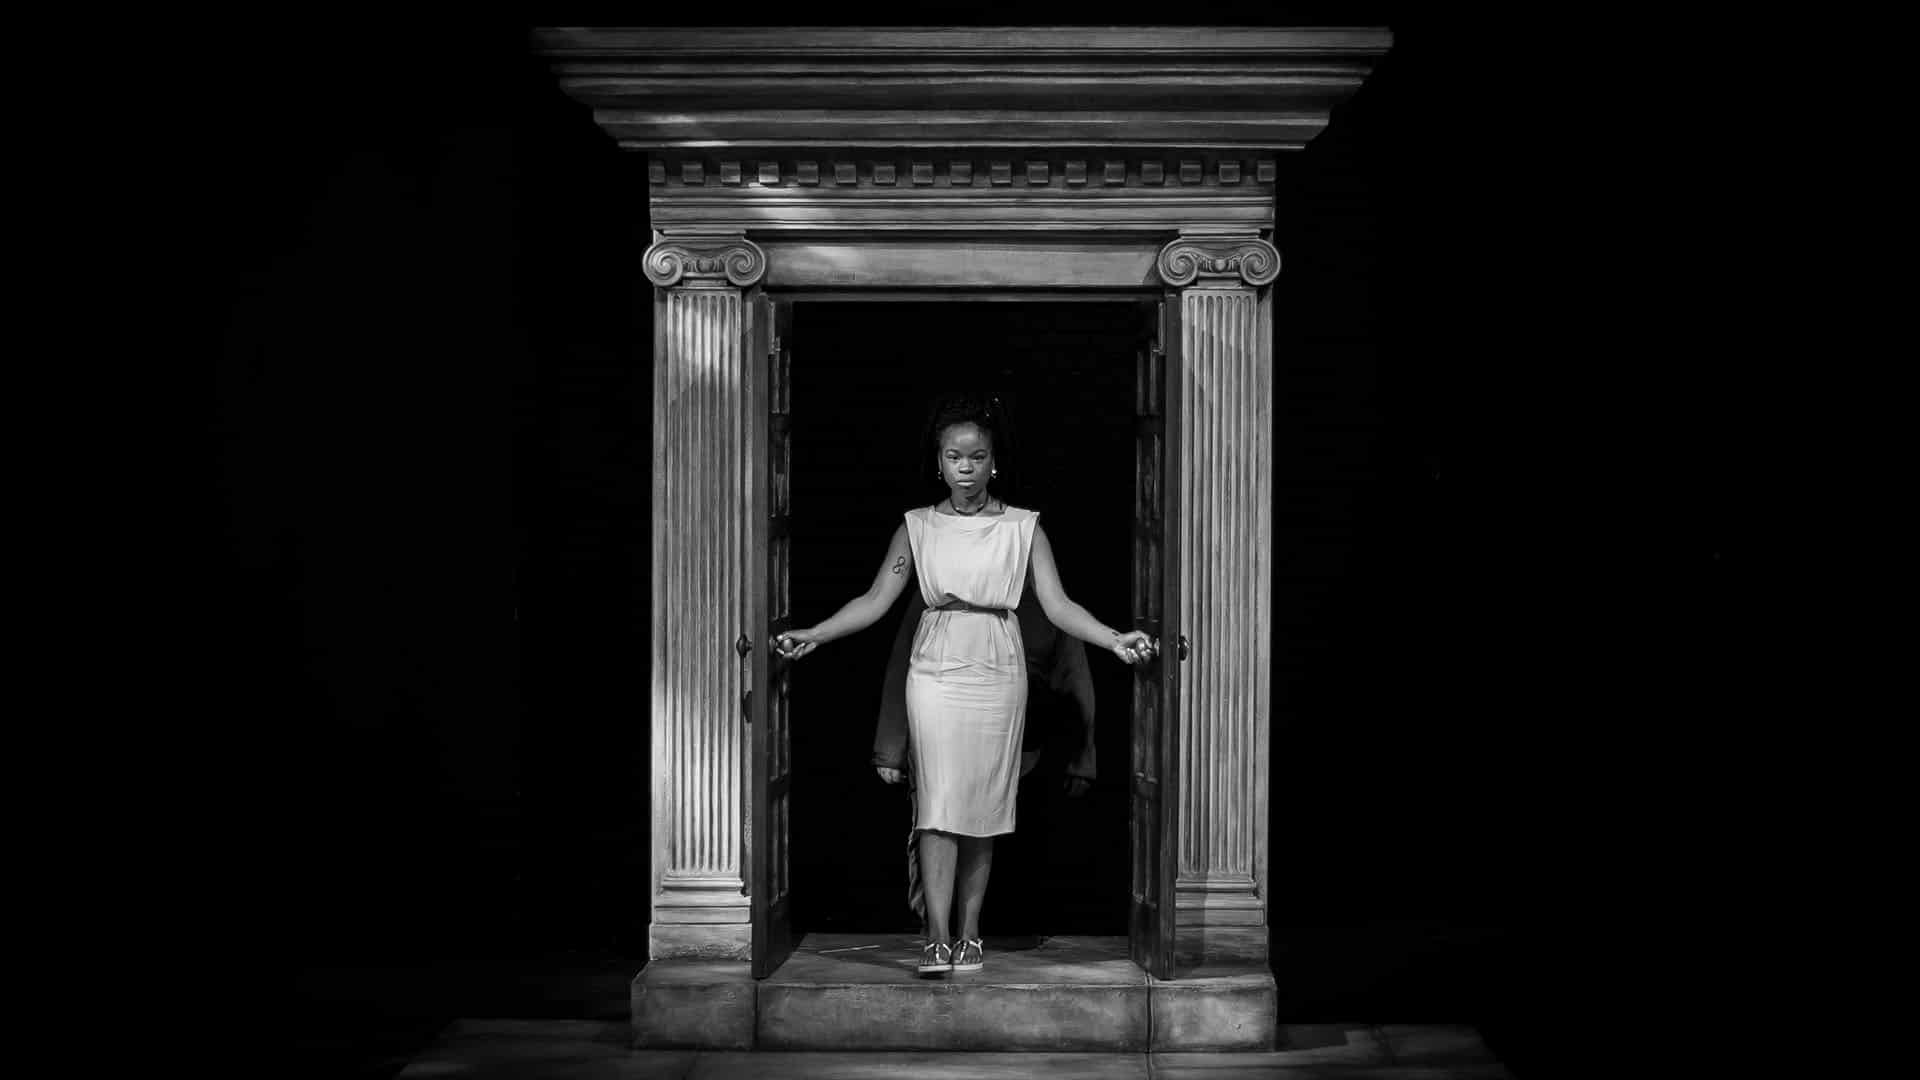 Antigone Rehearsals - Rachel Nwokoro as Antigone, defiantly walking through an ancient looking pillared doorway, wearing a tunic dress